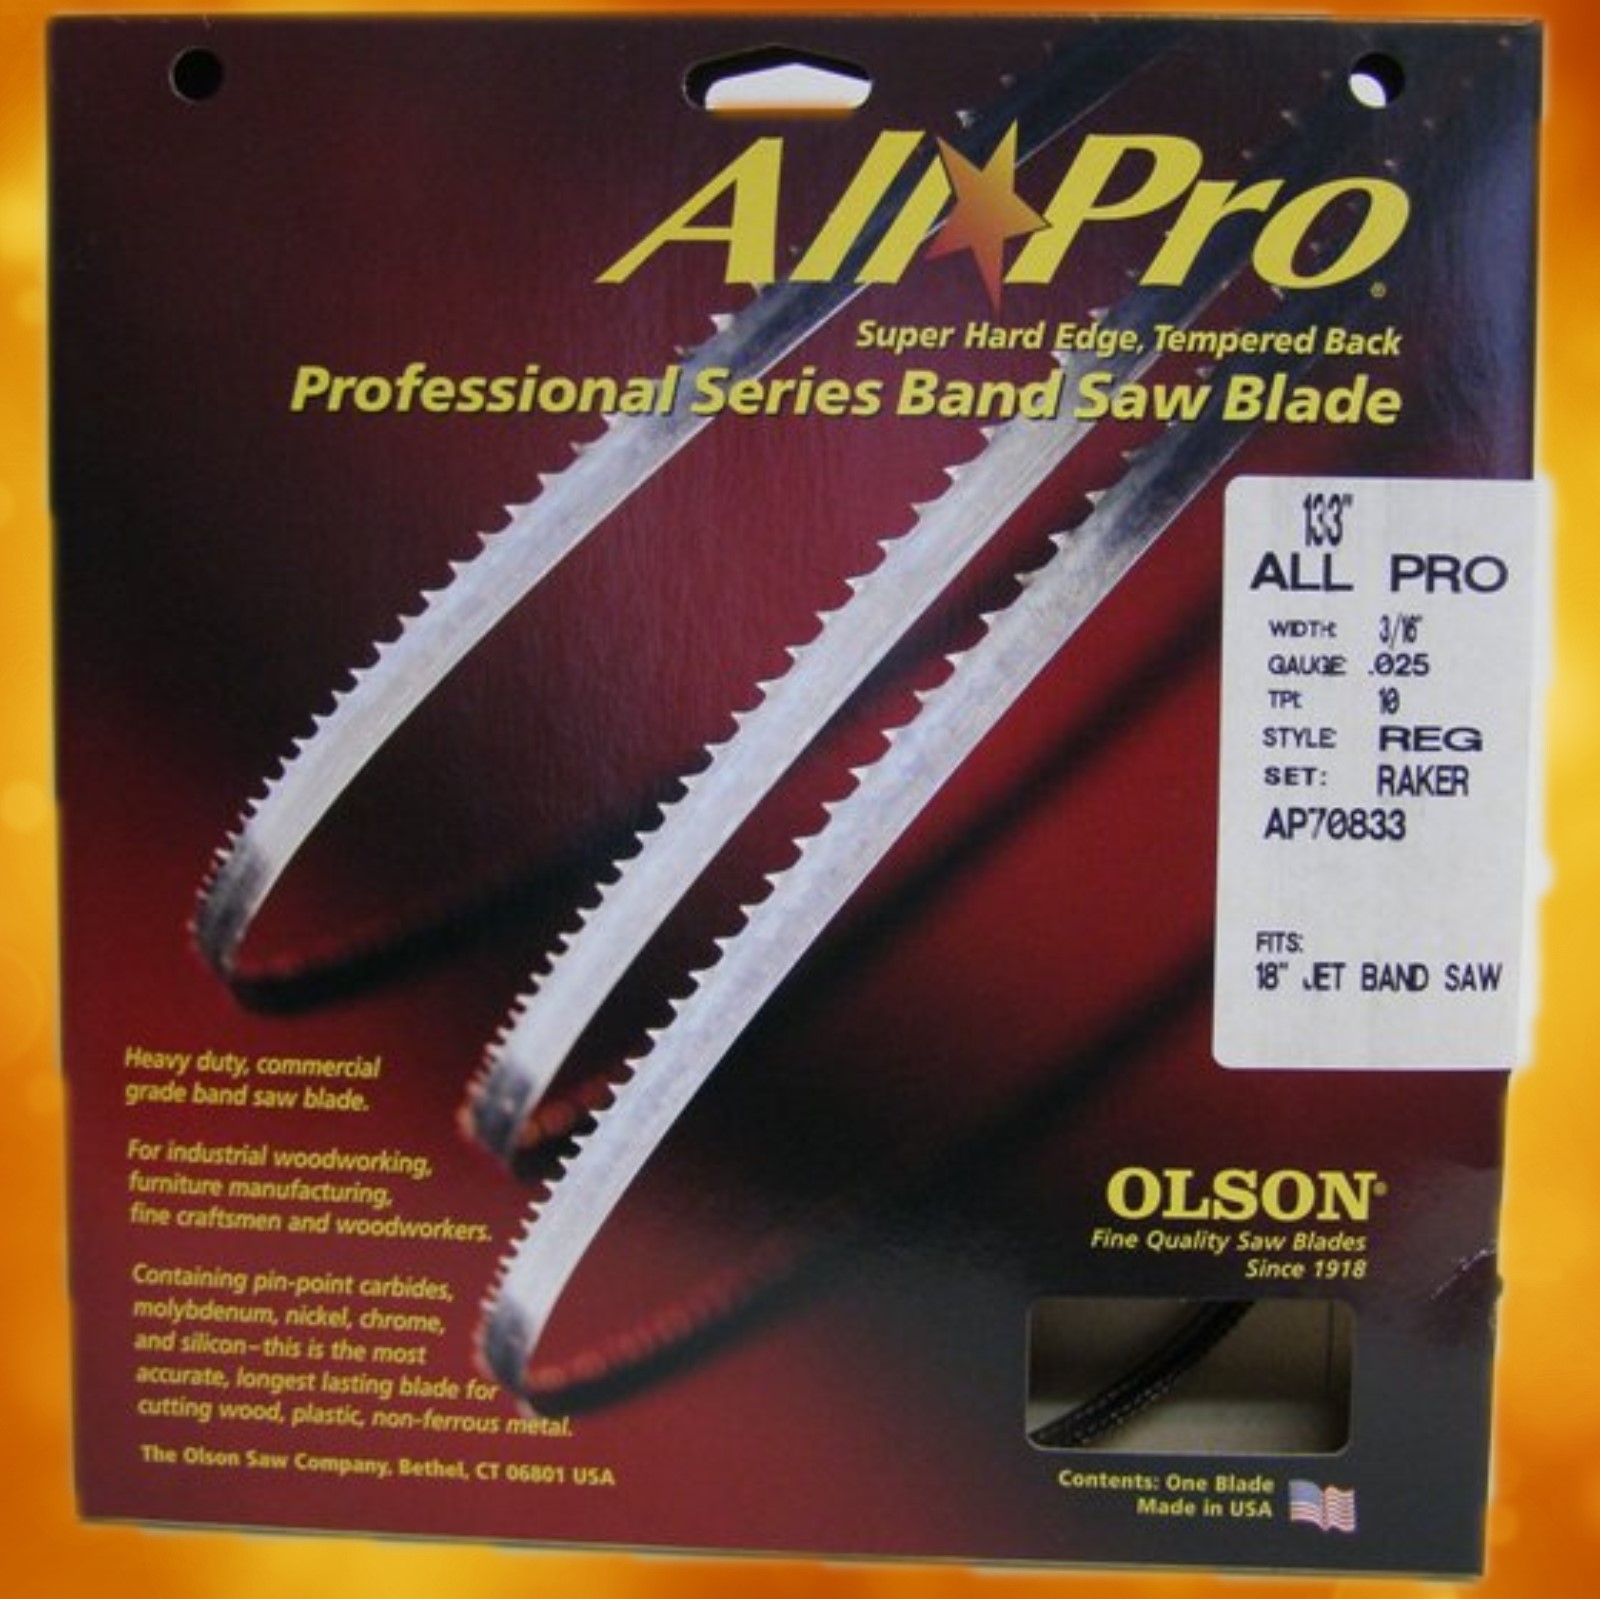 Olson 133" All Pro Band Saw Blade 3/16" x .025" 10 TPI Style Regular AP70833 AP70833